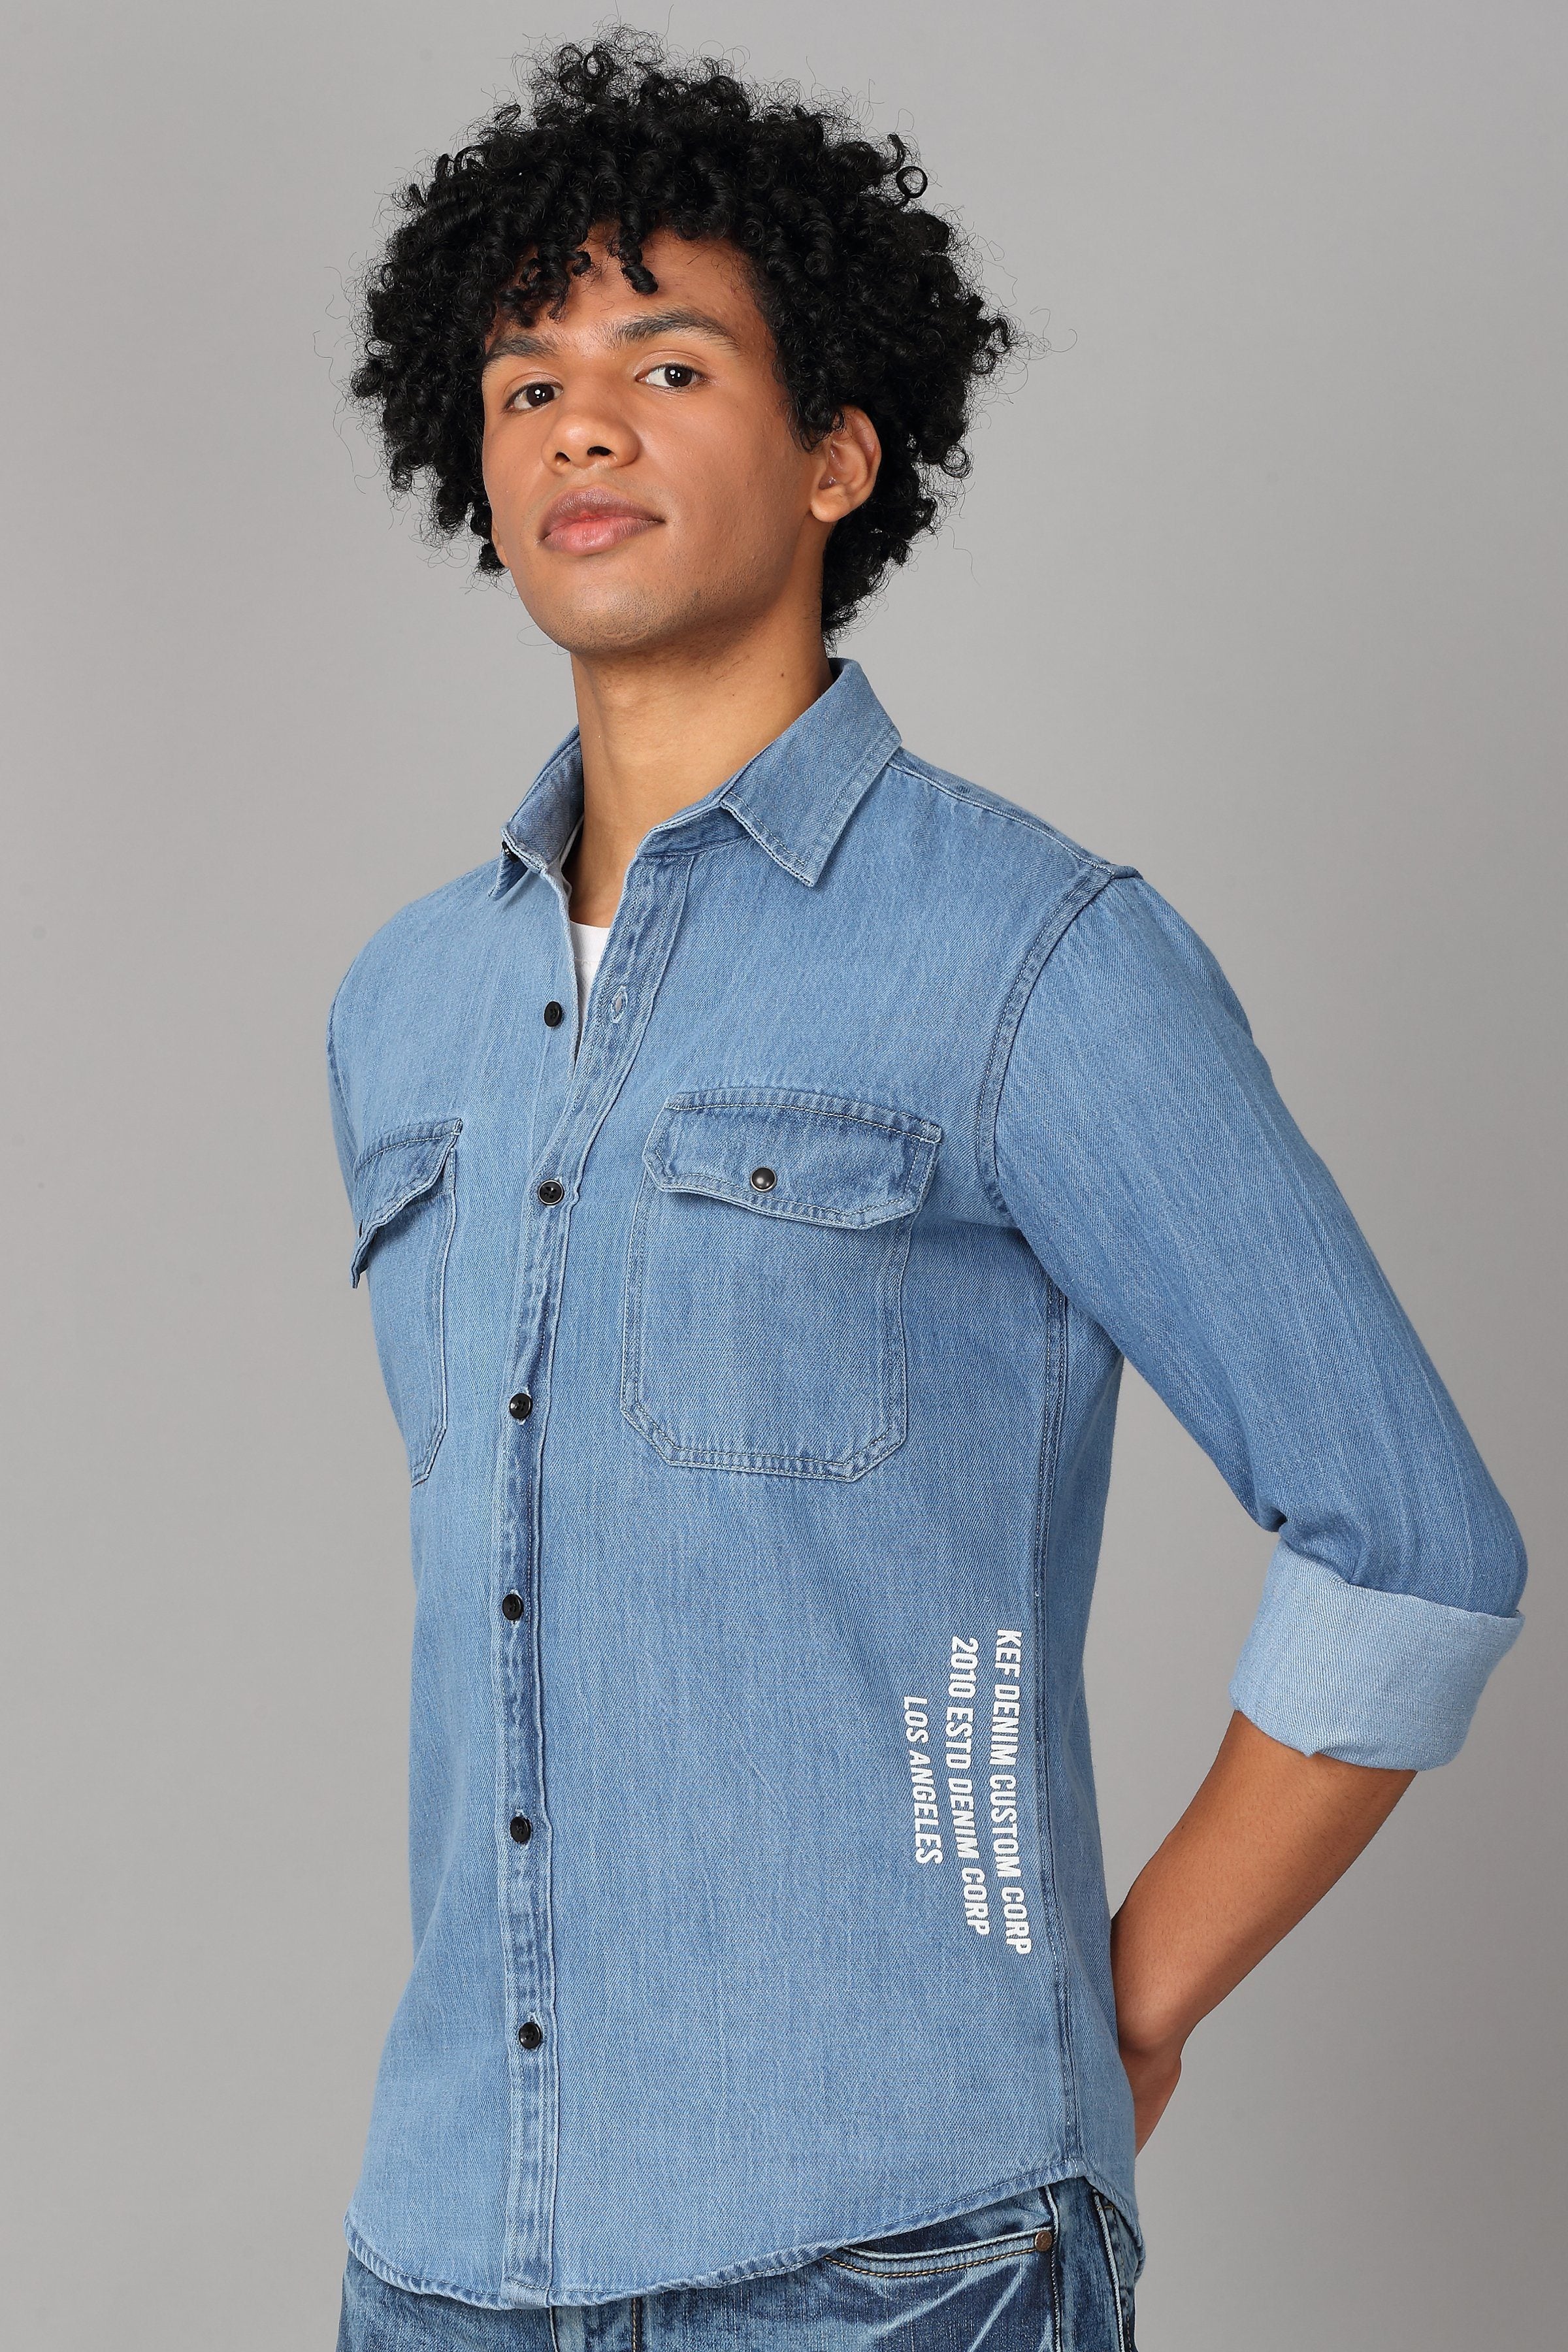 FidgetGear Fashion Men's Denim Jeans Shirt Casual Autumn Long Sleeve Denim  Cotton Shirt Light Blue 2XL : Amazon.in: Clothing & Accessories